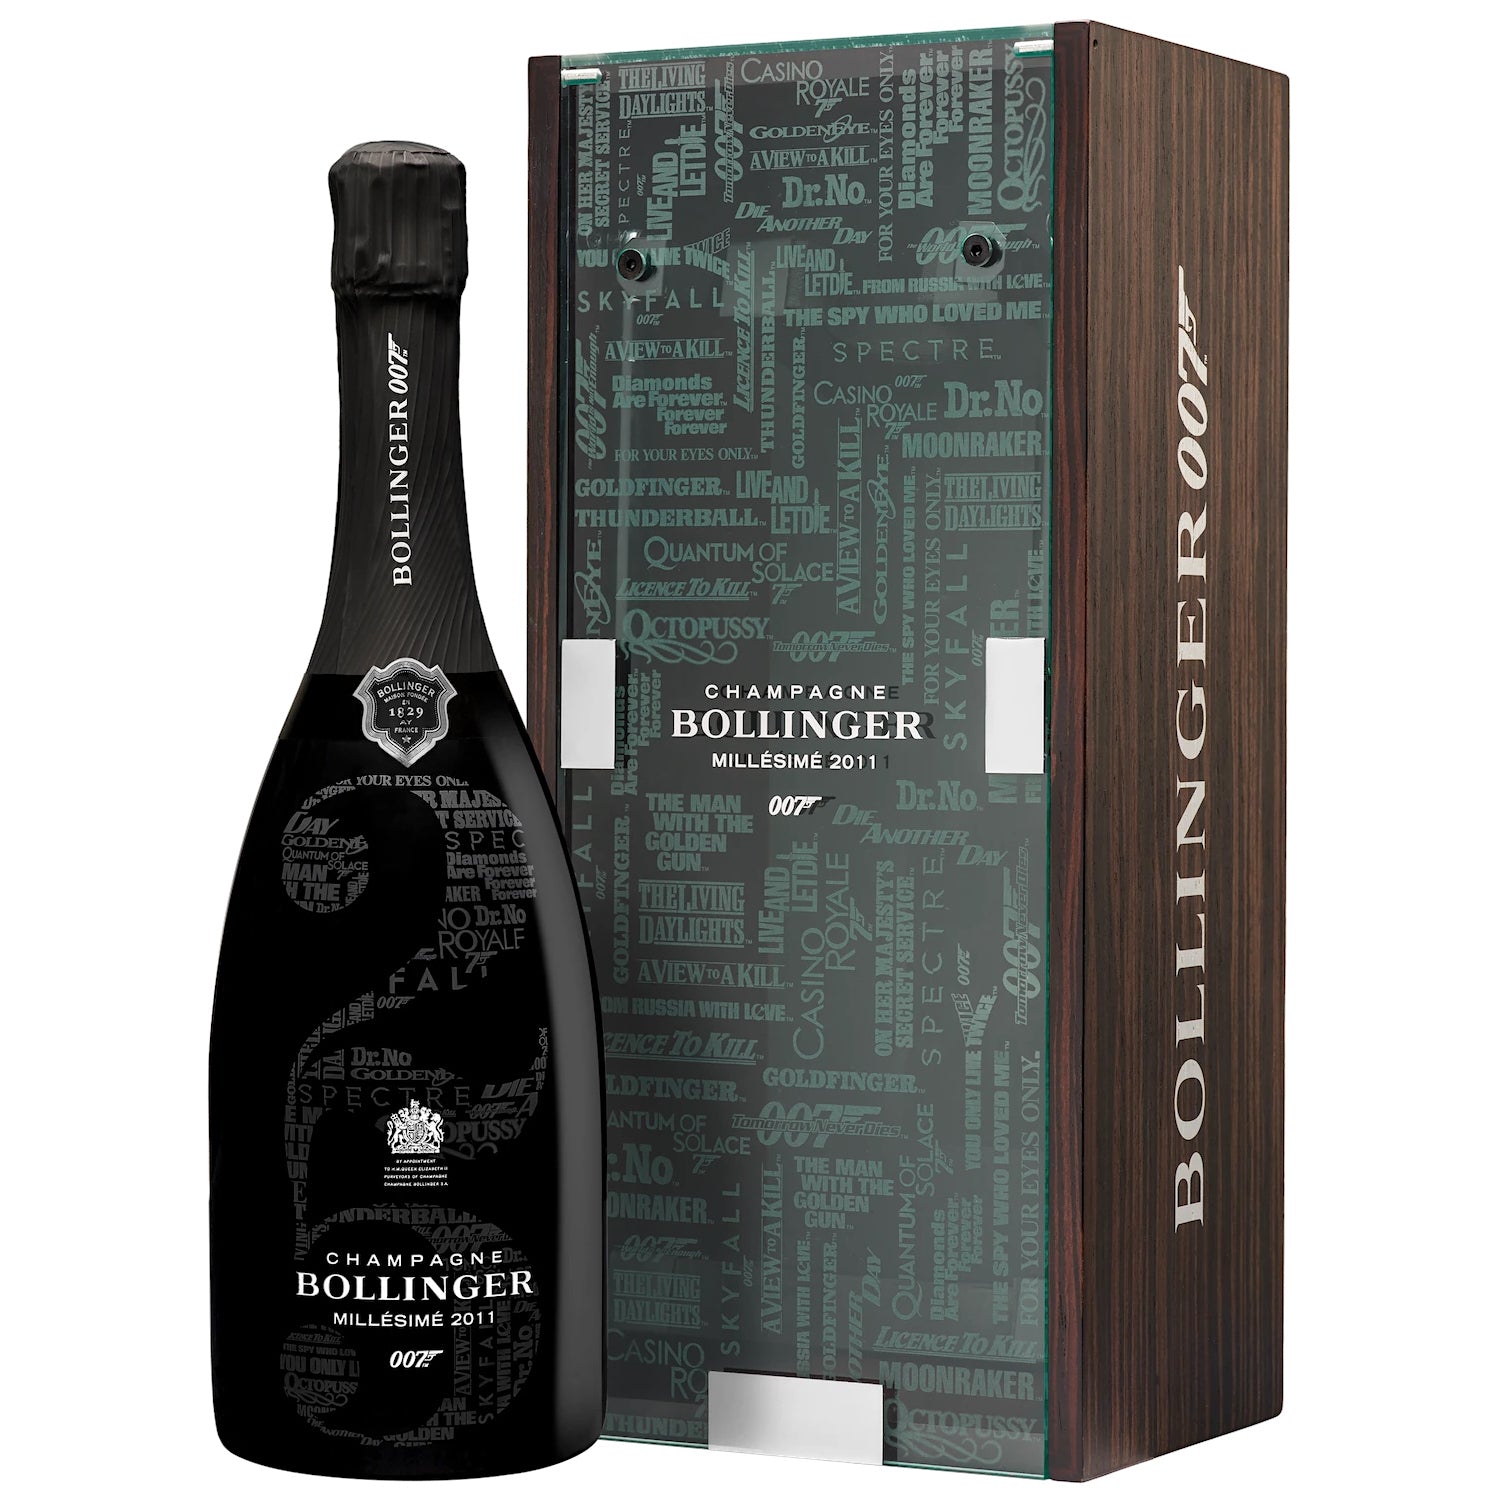 Champagne Bollinger 007 James Bond Limited Edition [750ml]